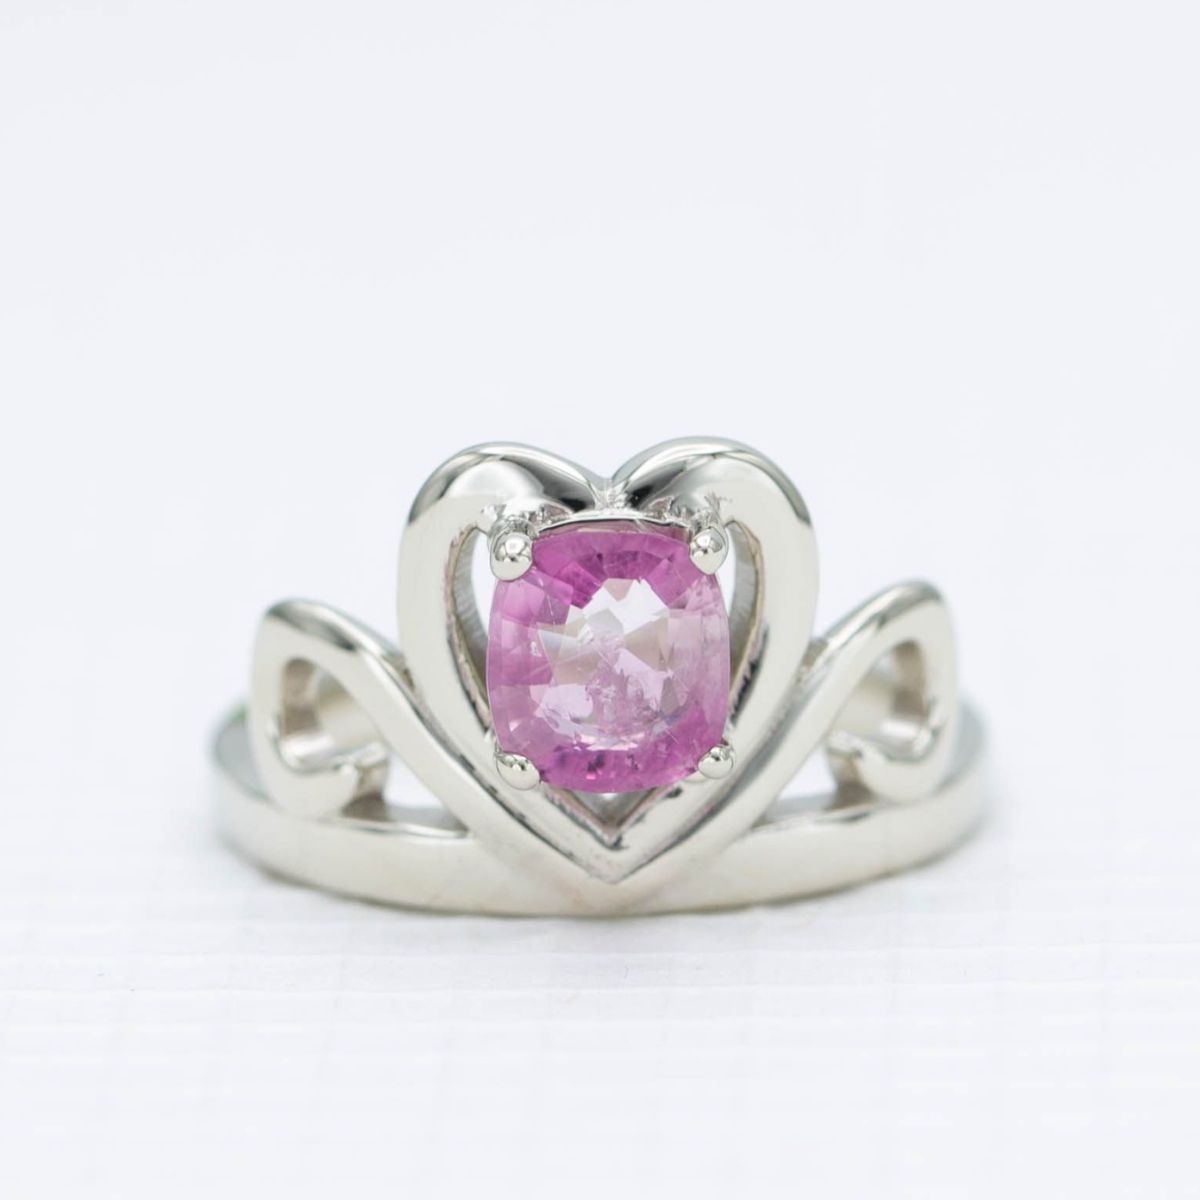 Unique Gemstone Rings with Uncommon Center Stones | CustomMade.com